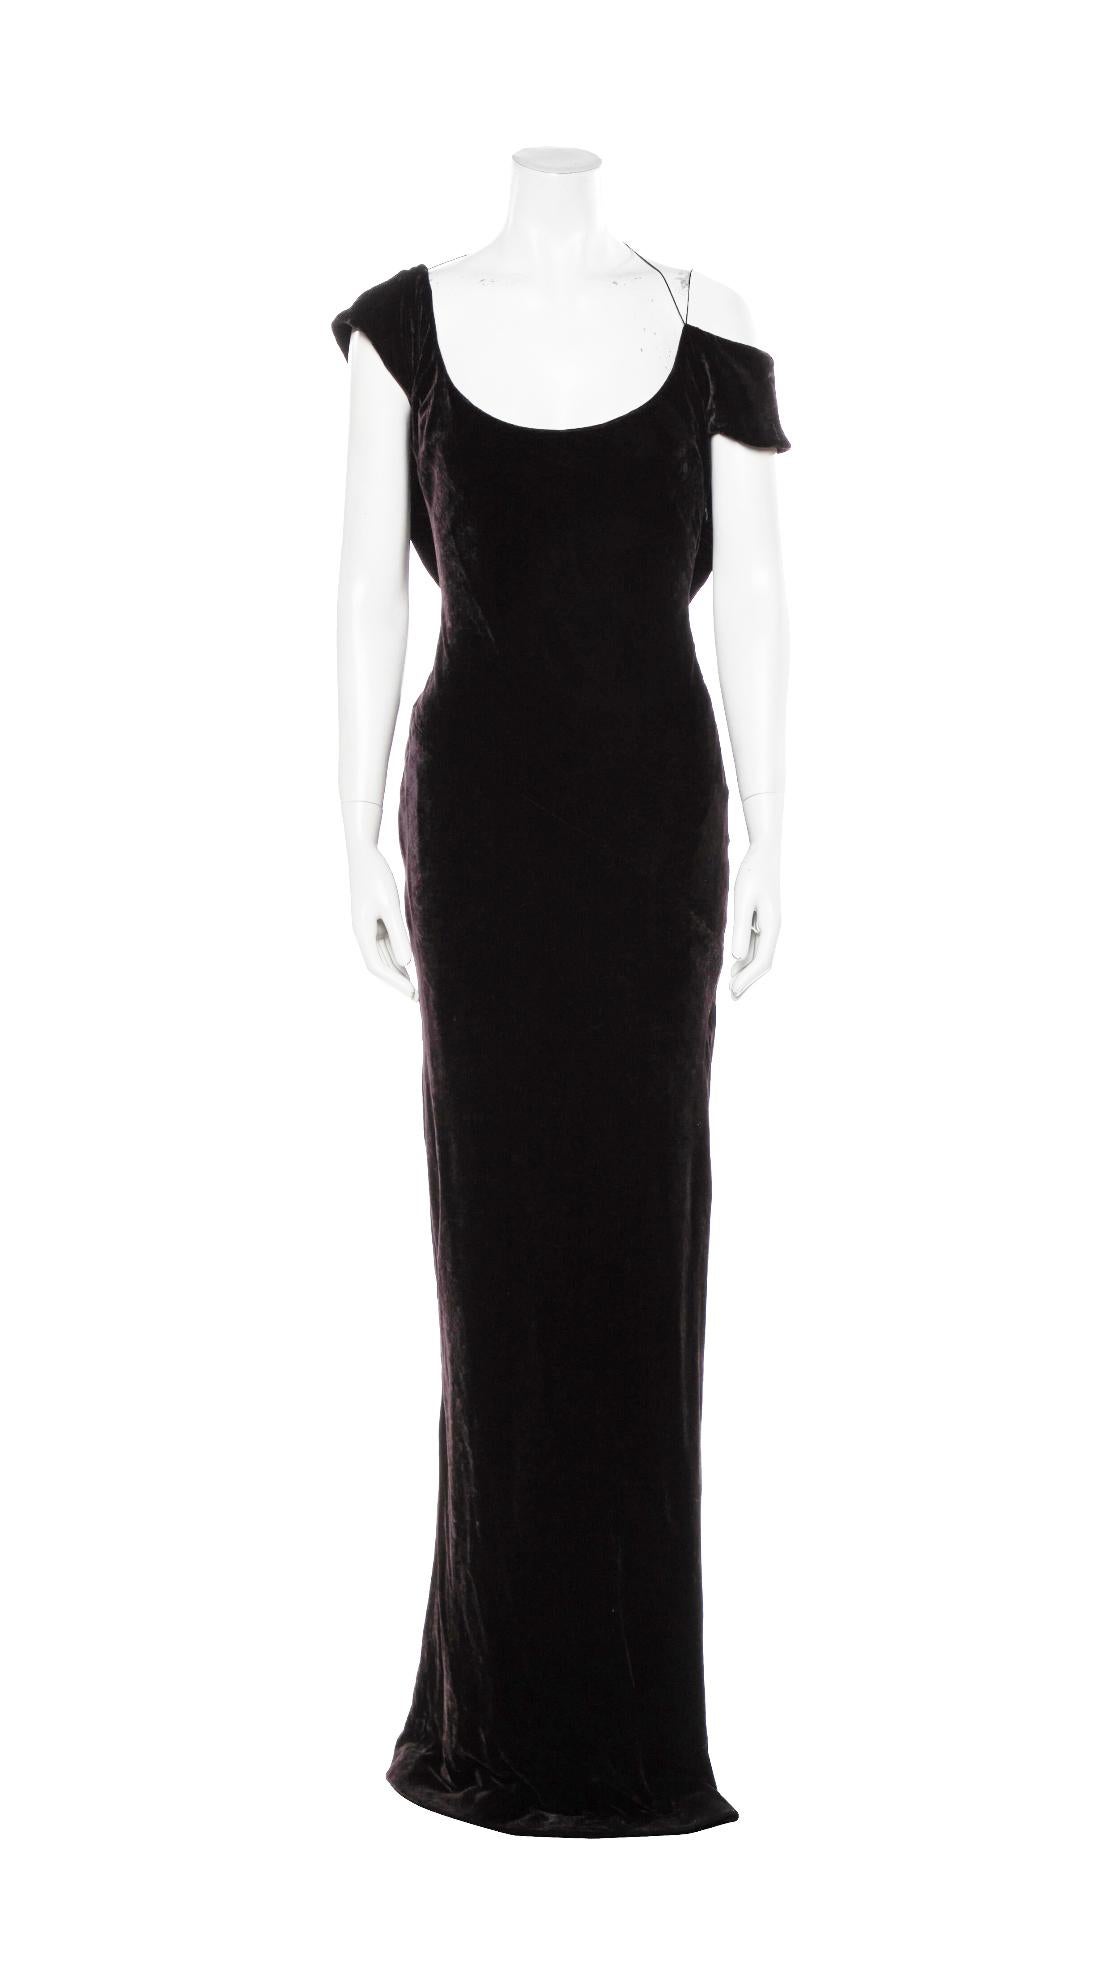 1990s Richard Tyler navy/ deep purple velvet gown 
Condition; excellent
100% silk
34